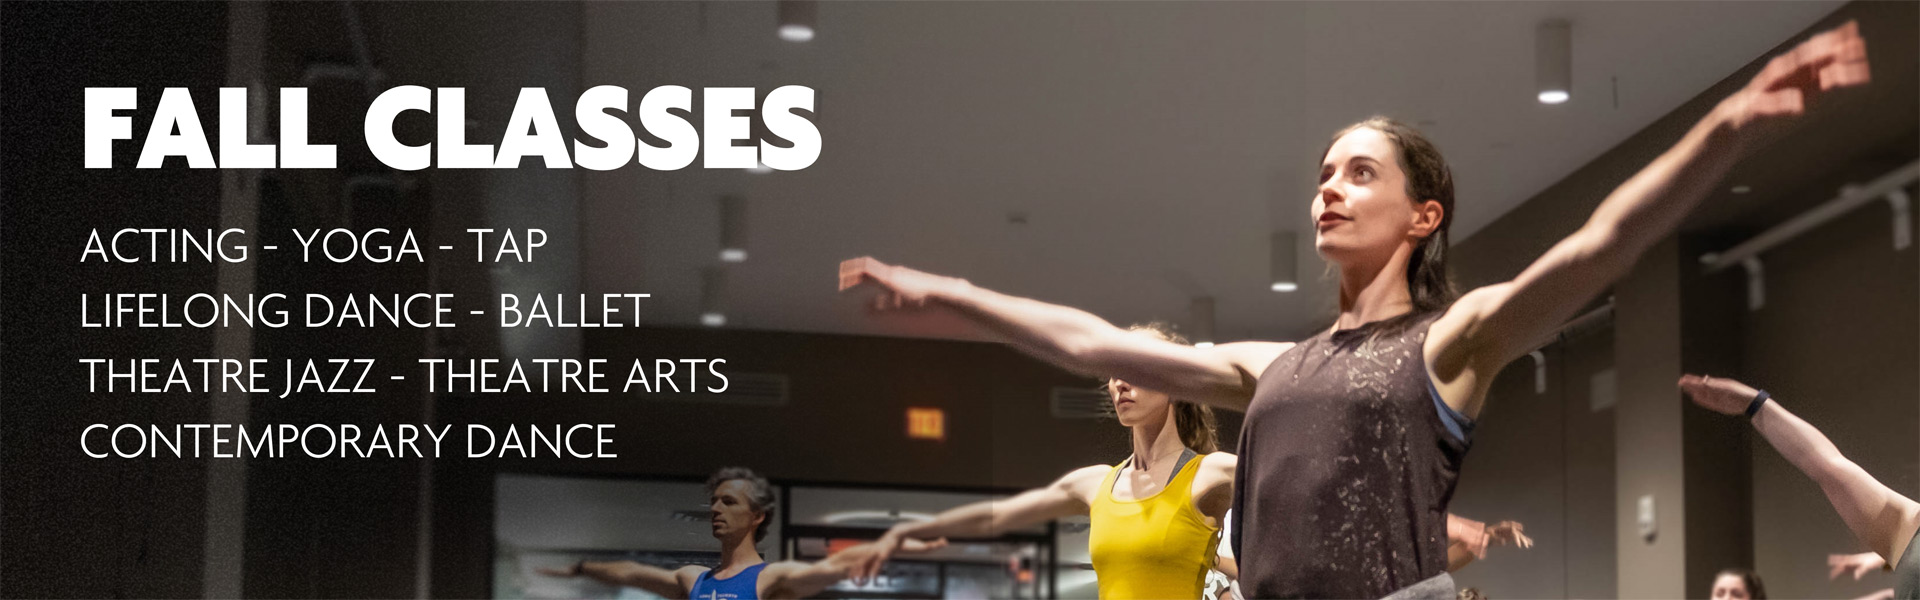 Fall Classes: Acting - Yoga - Tap - Lifelong Dance - Ballet - Theatre Jazz - Theatre Arts - Contemporary Dance